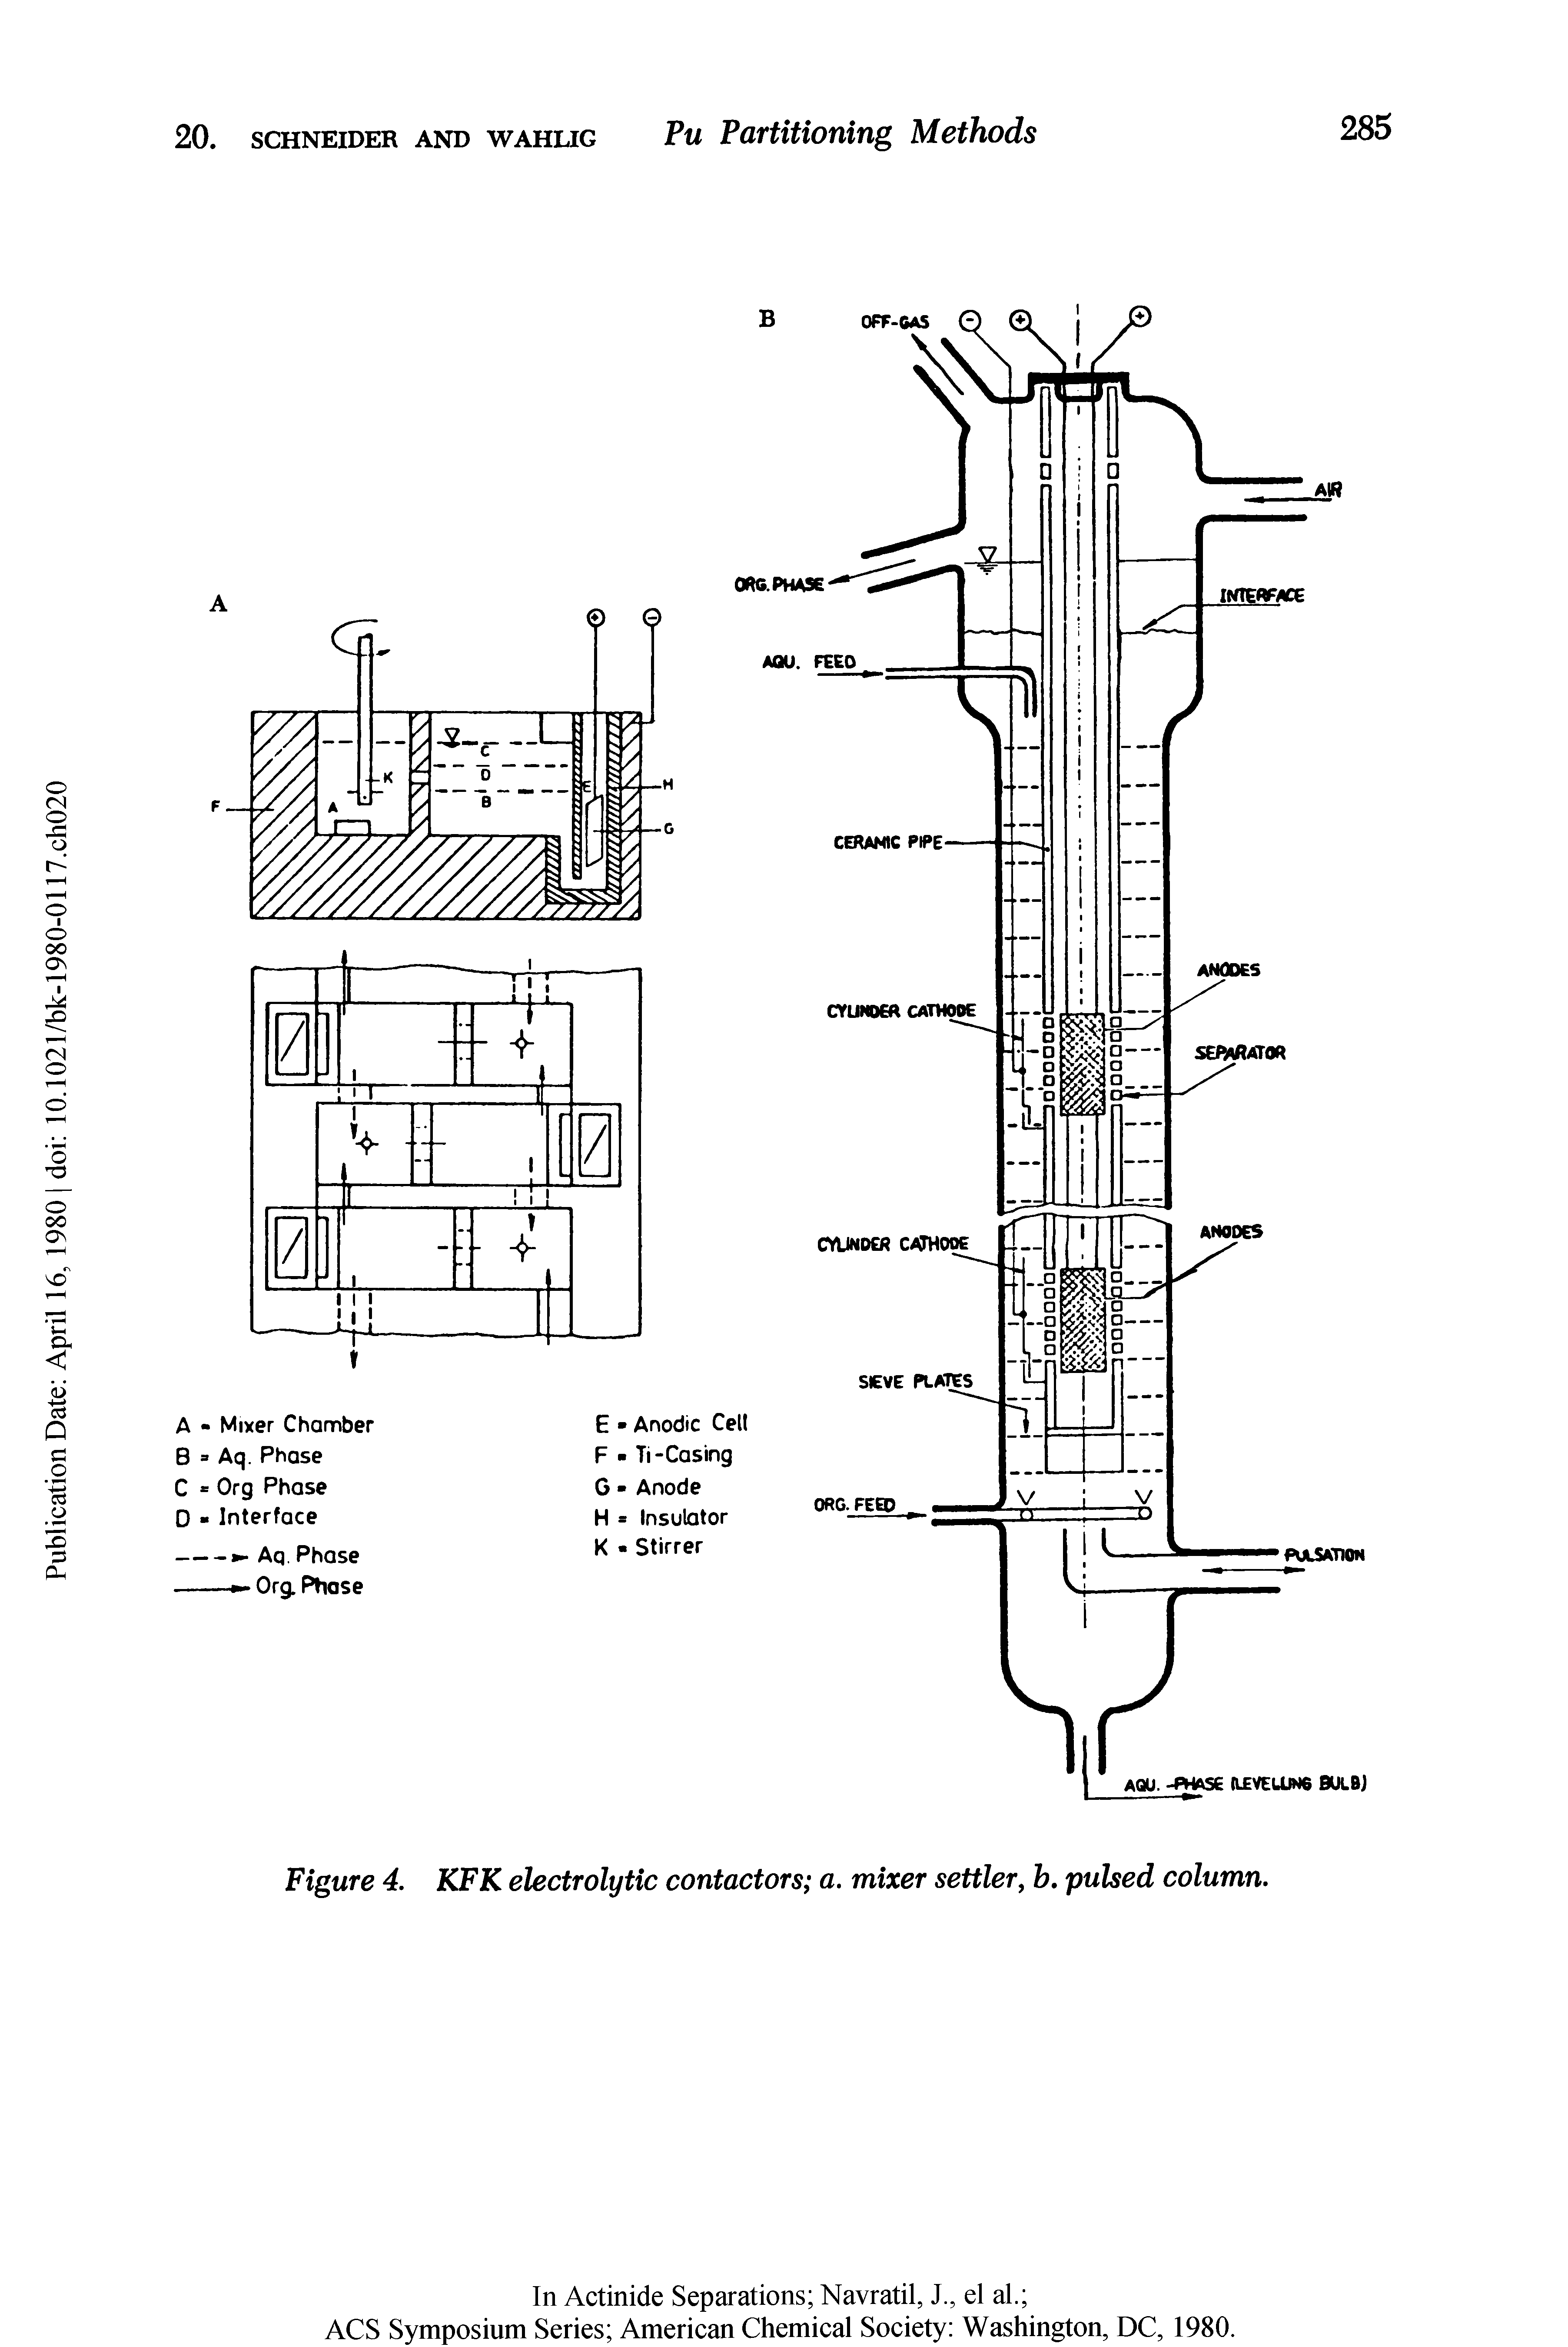 Figure 4. KFK electrolytic contactors a. mixer settler, h. pulsed column.